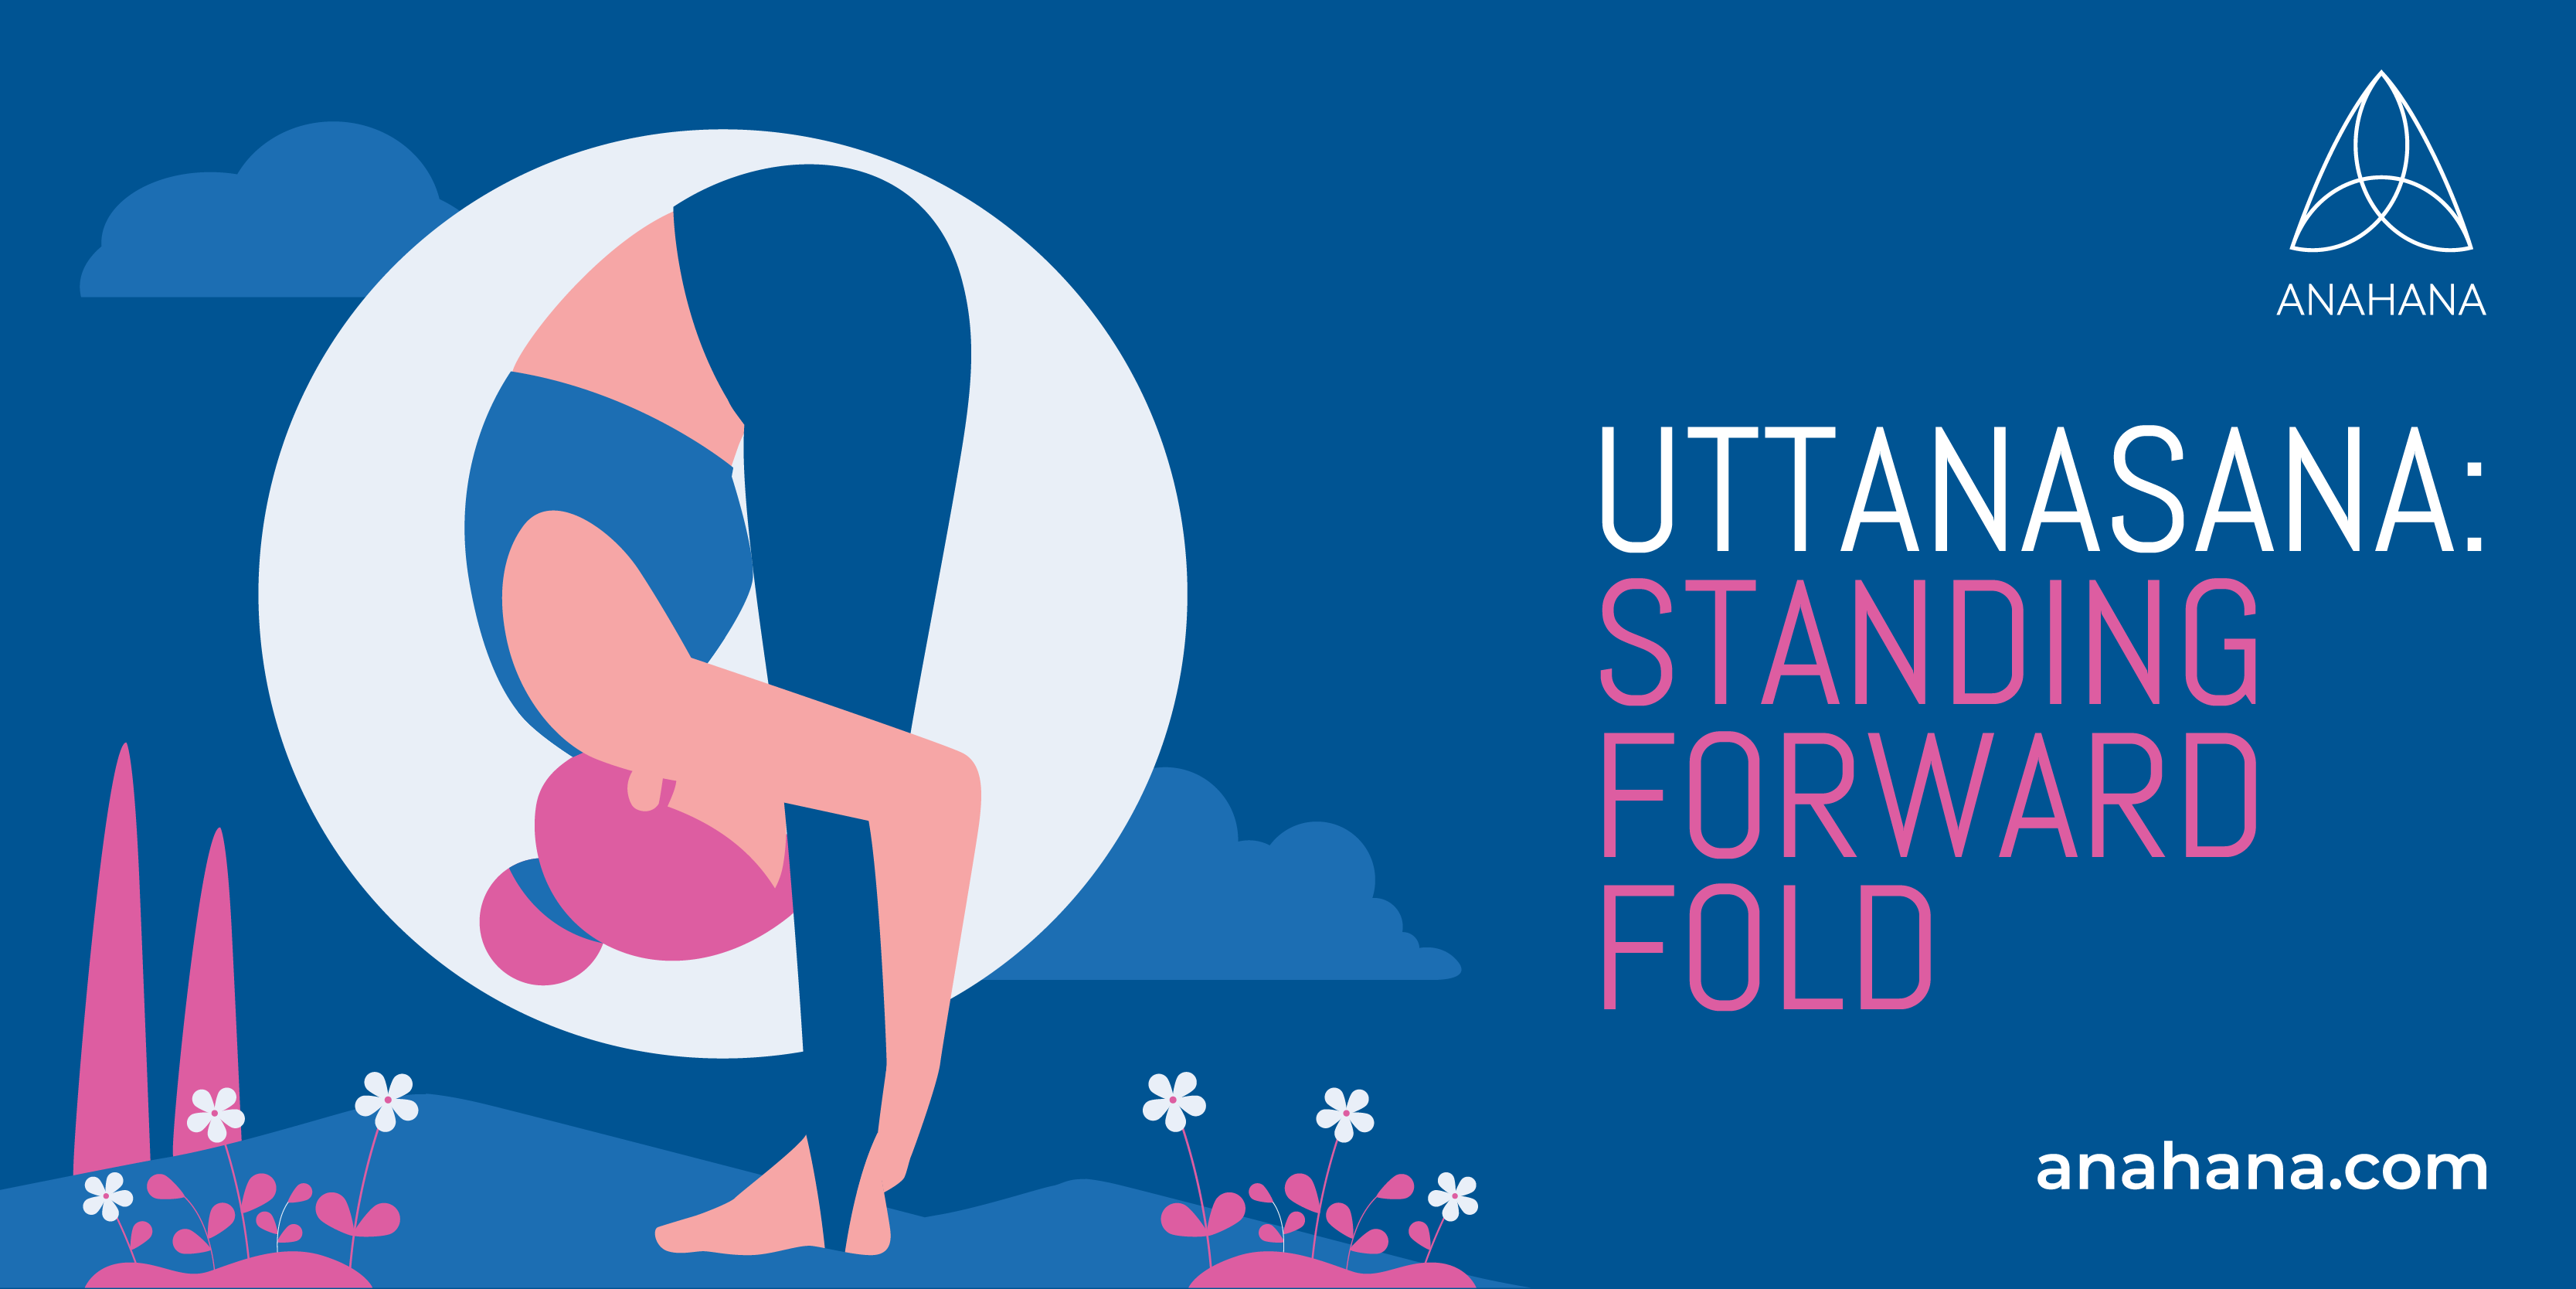 uttanasana, standing forward fold explained